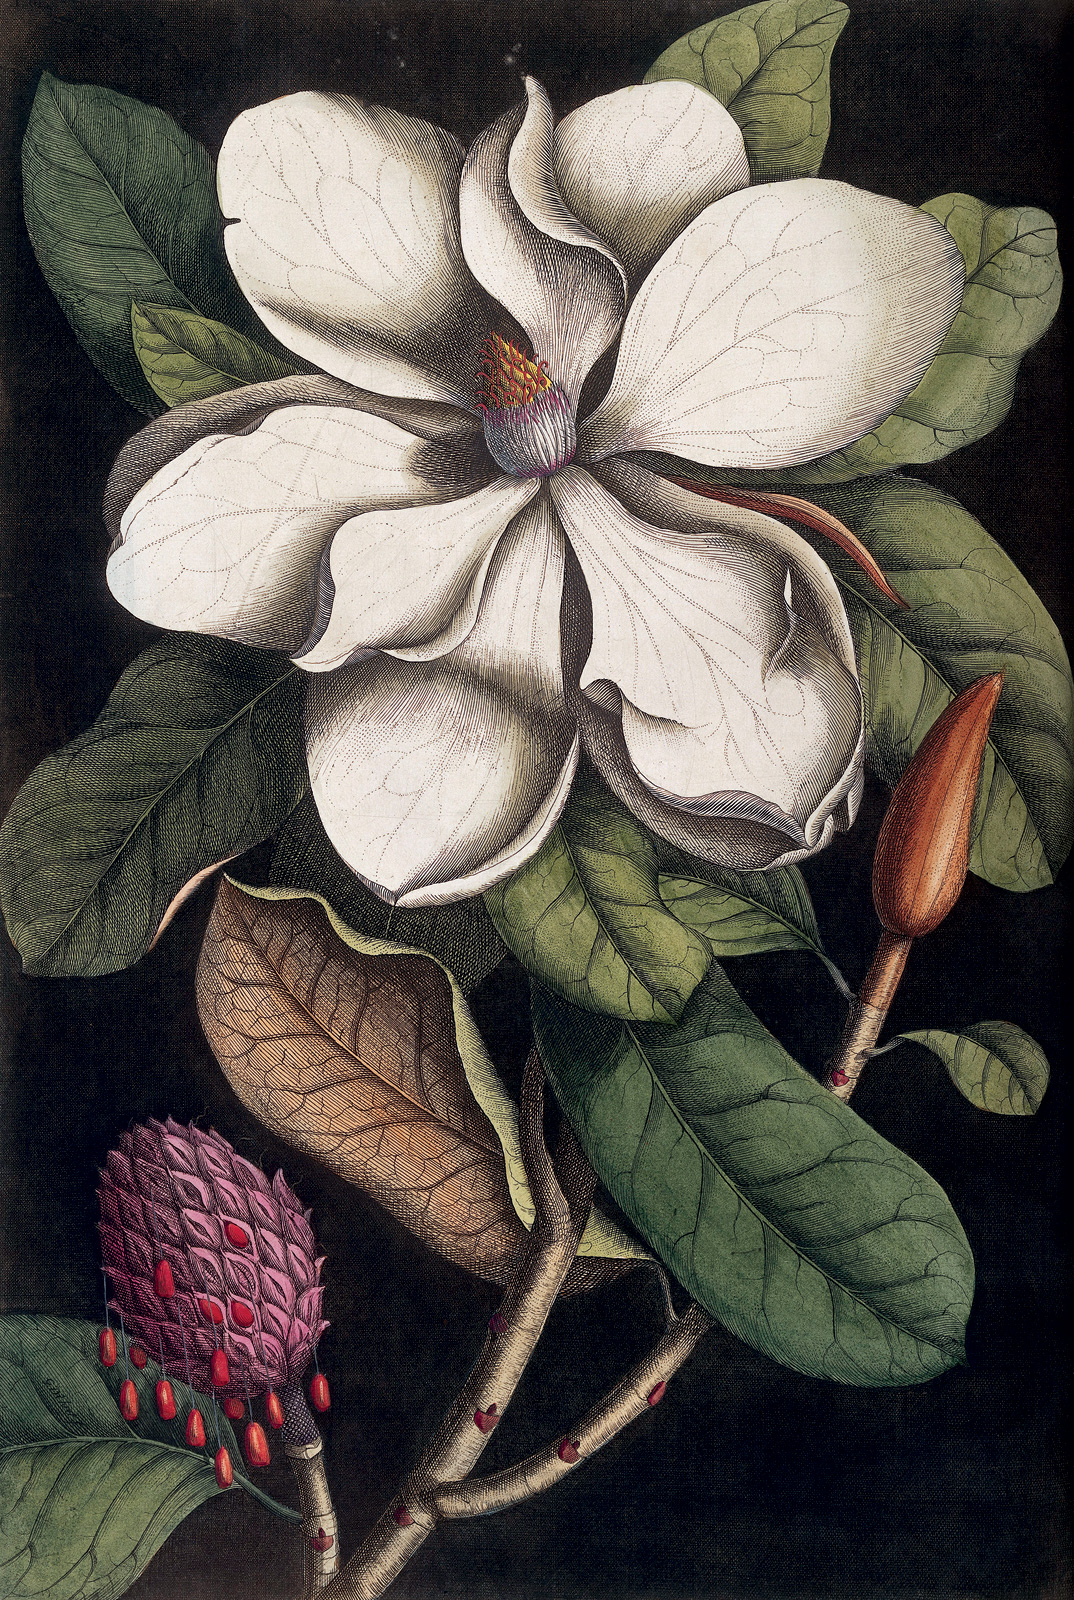 Georg Dionysius Ehret, *Magnolia altifima y su semilla*, 1731 